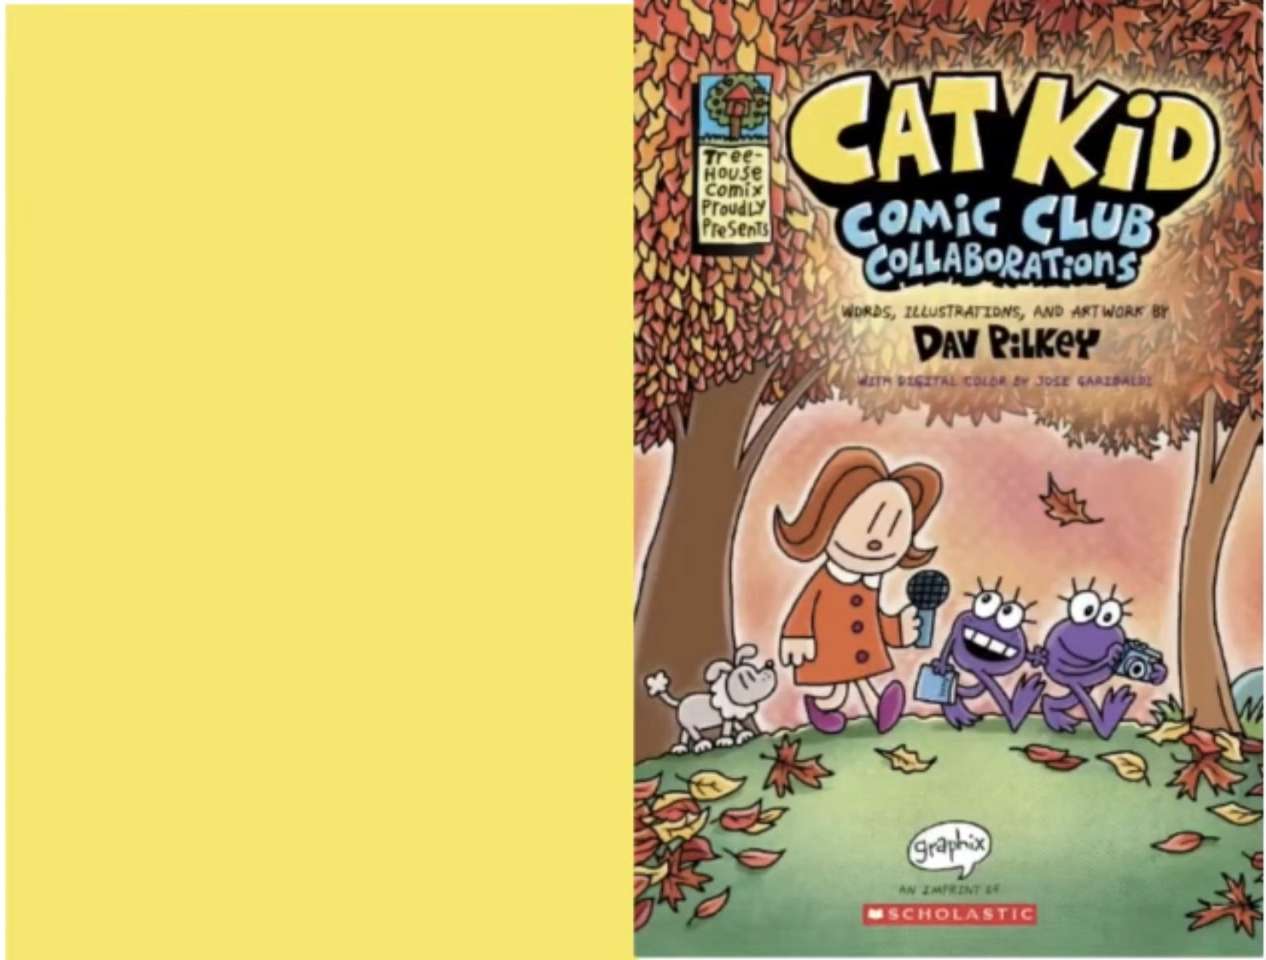 Kooperationen mit dem Cat Kid Comic Club Online-Puzzle